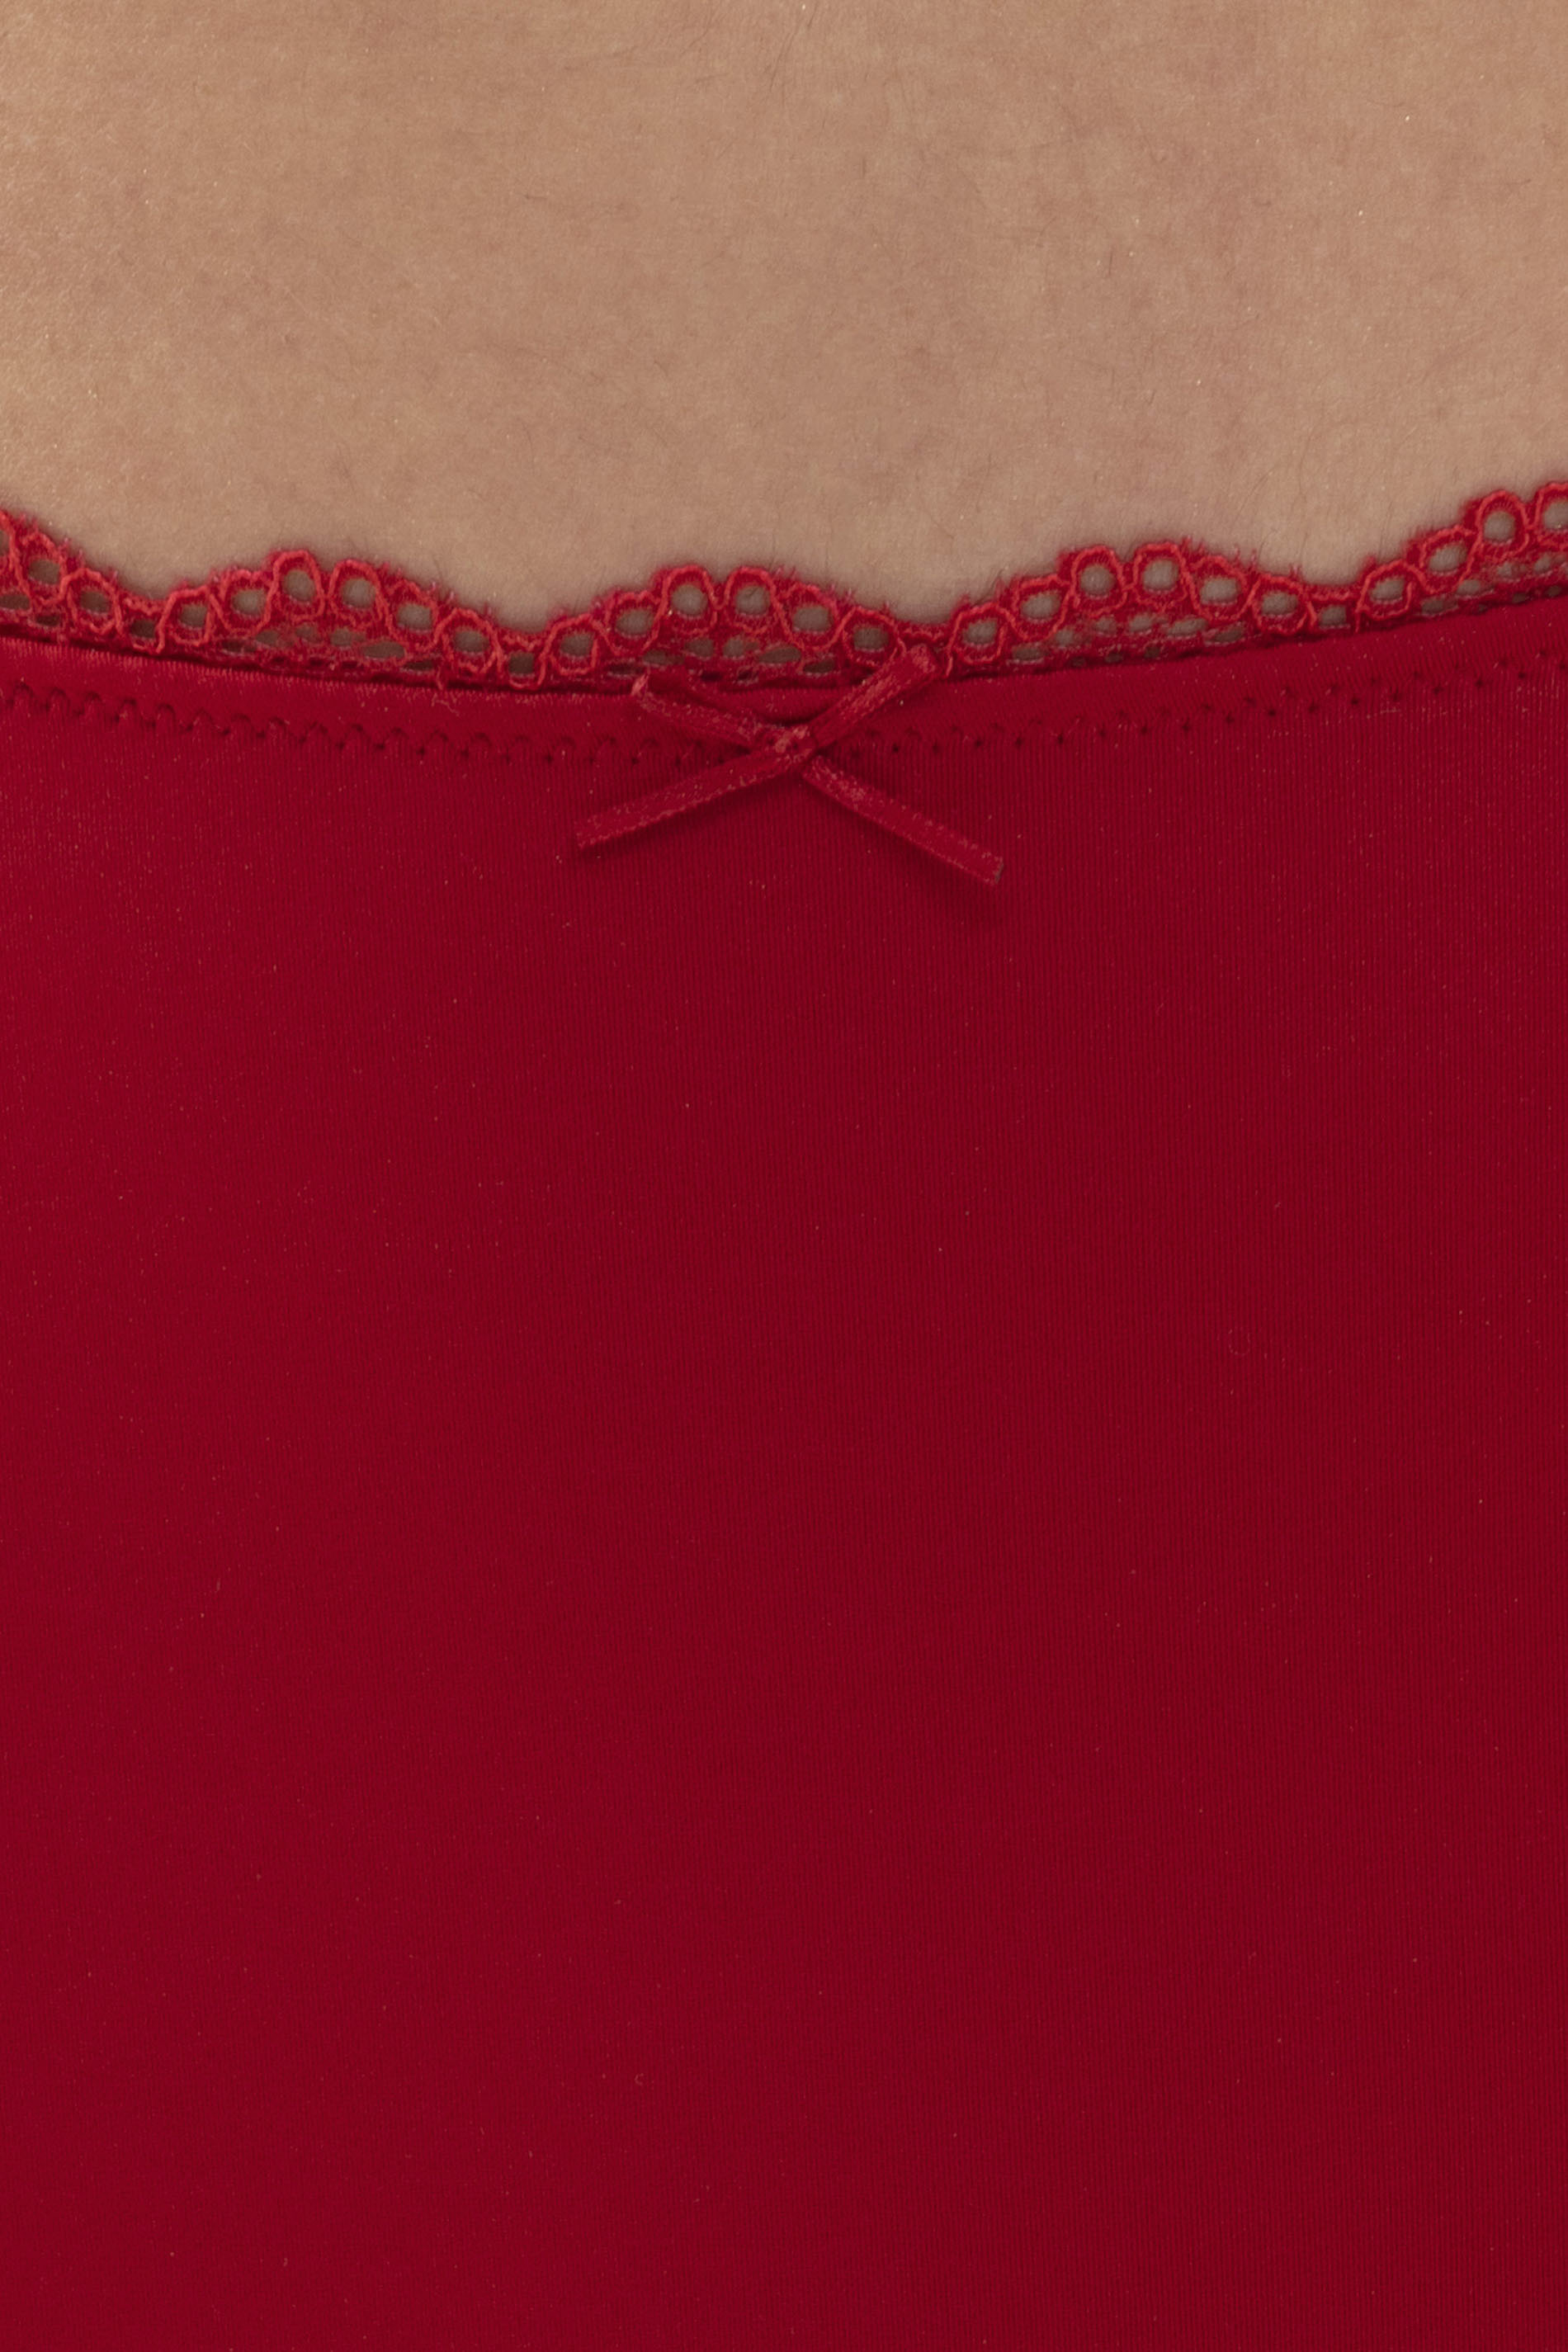 High waist pants Rubin Serie Amorous Detail View 01 | mey®